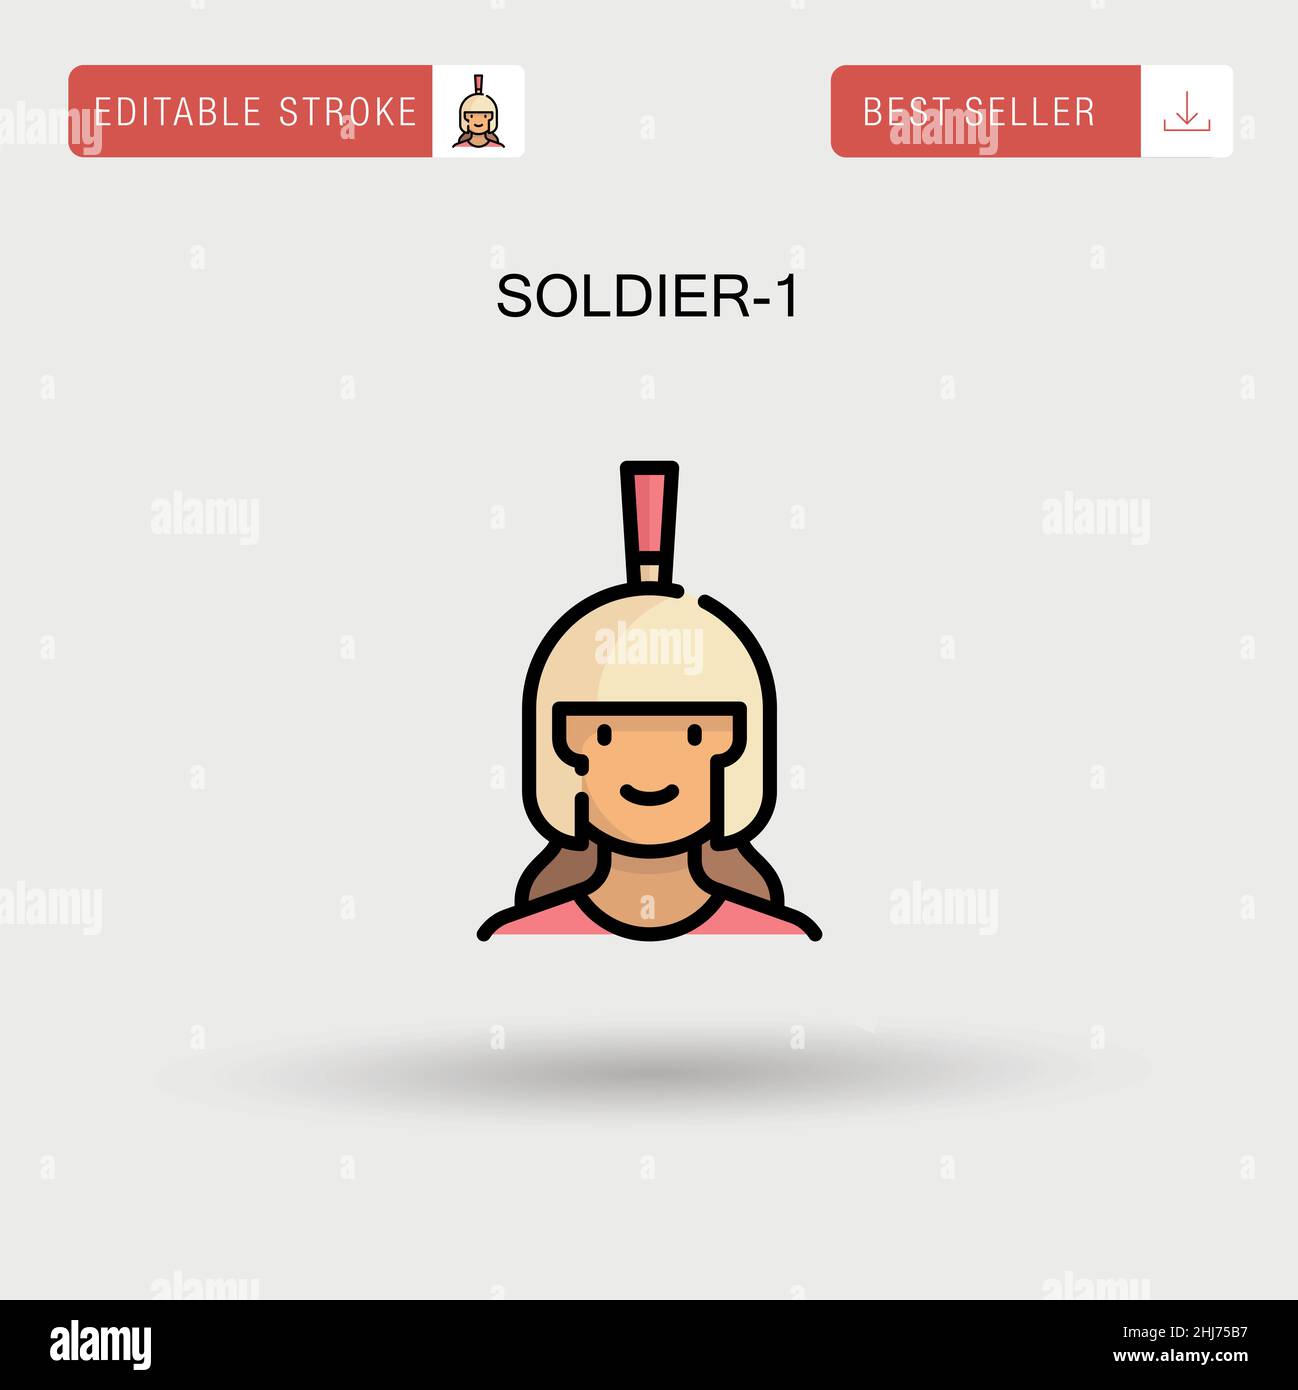 Soldier-1 einfaches Vektorsymbol. Stock Vektor